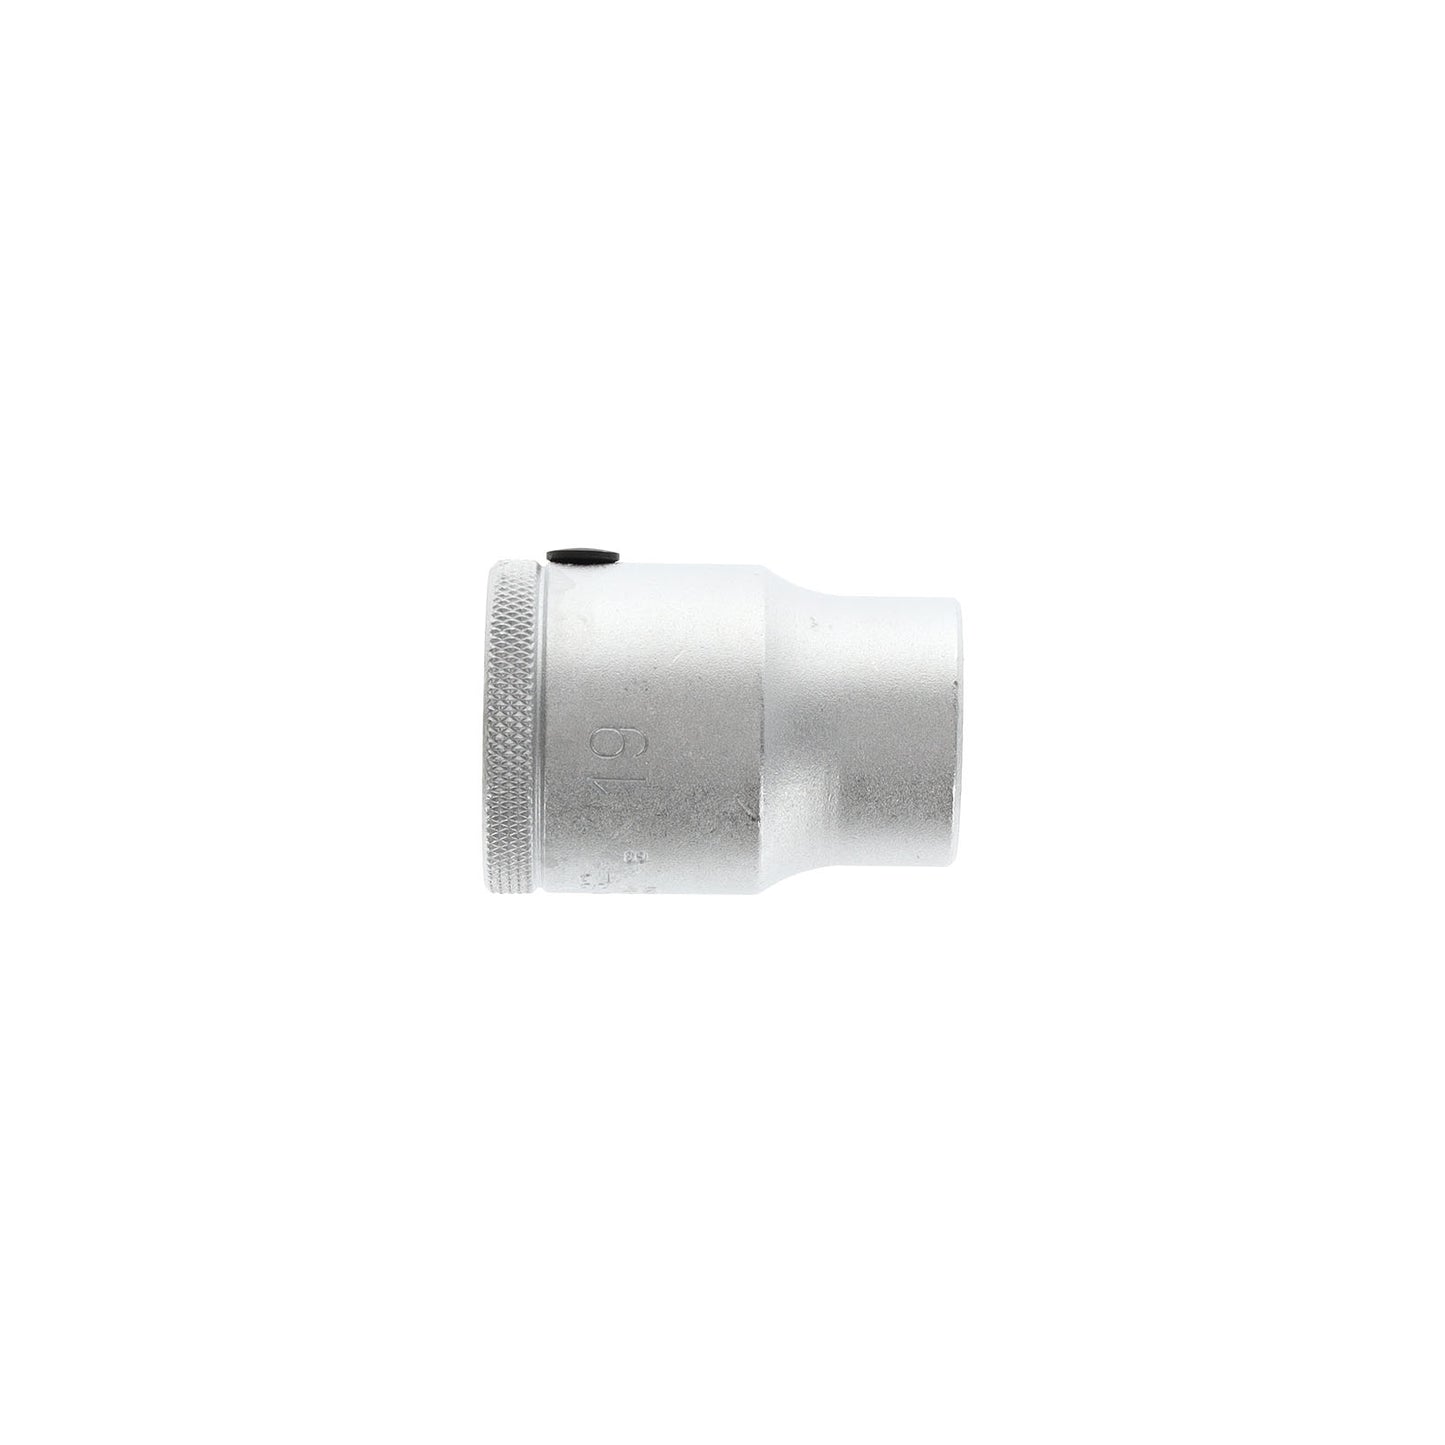 GEDORE 32 19 - Hexagonal socket 3/4", 19 mm (6270110)